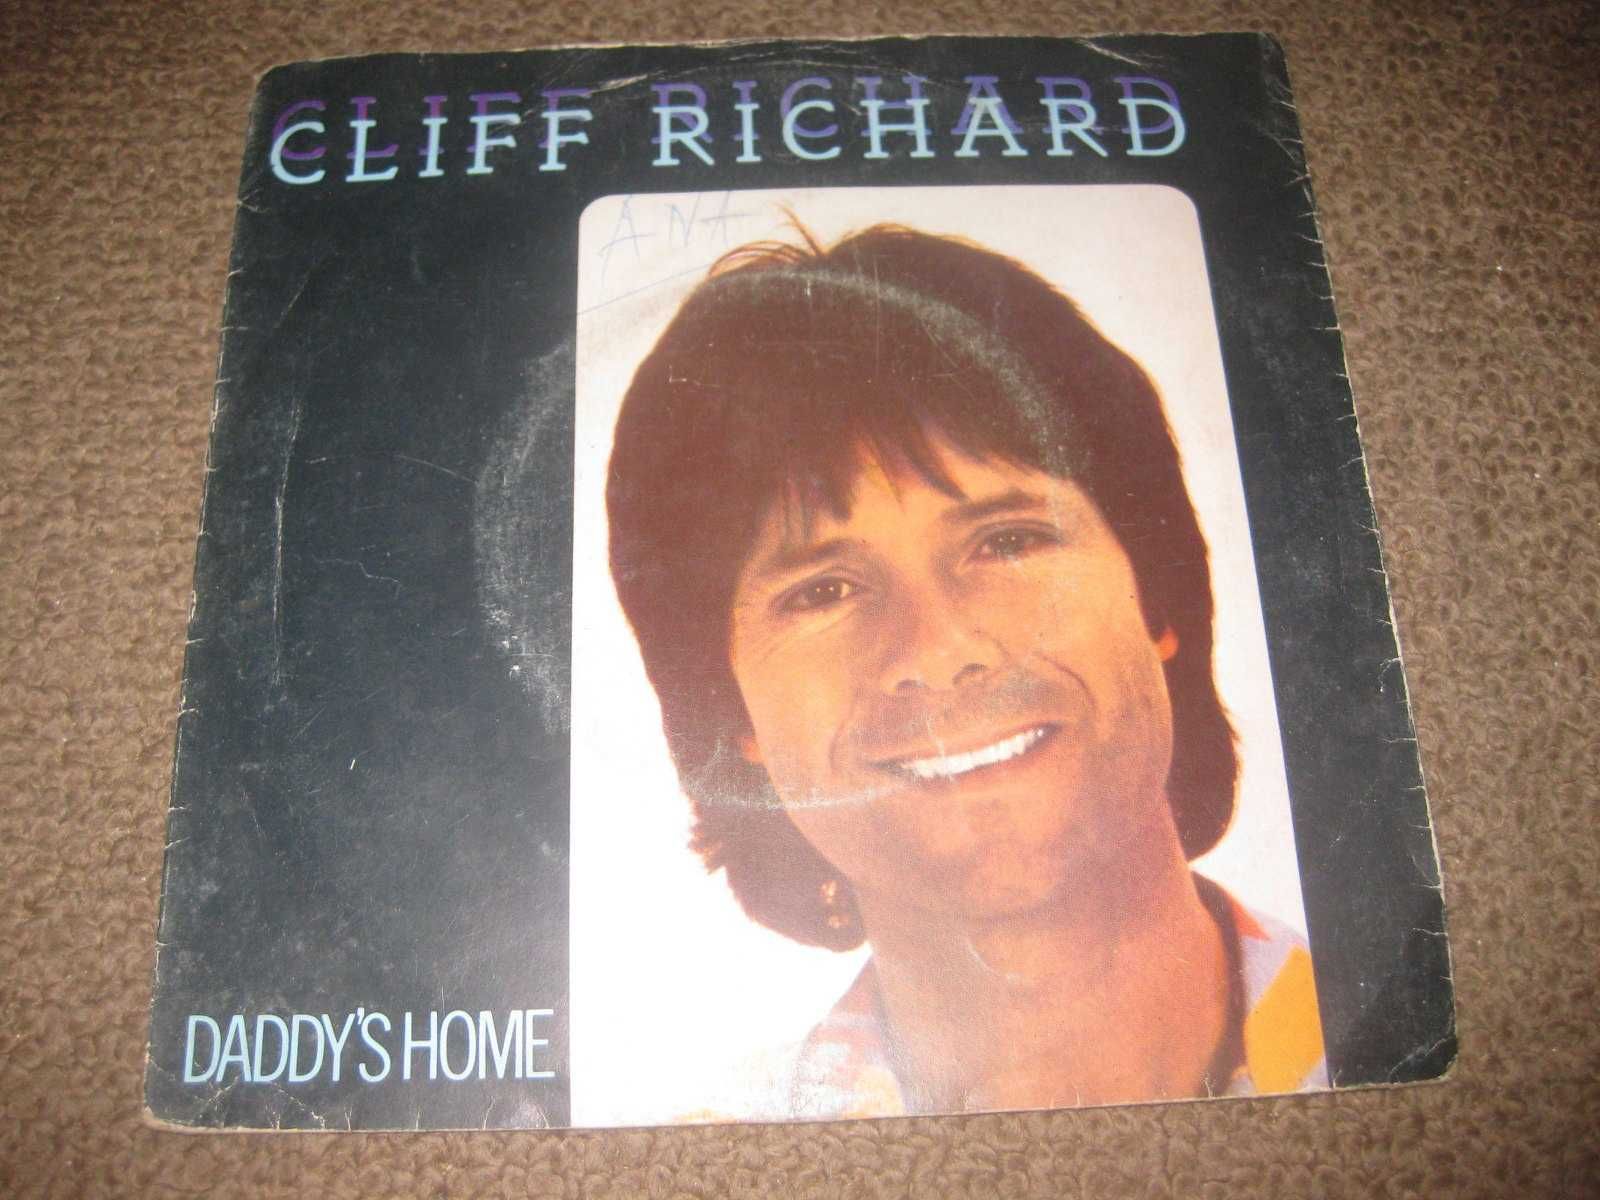 Vinil Single do Cliff Richard "Daddy`s Home"